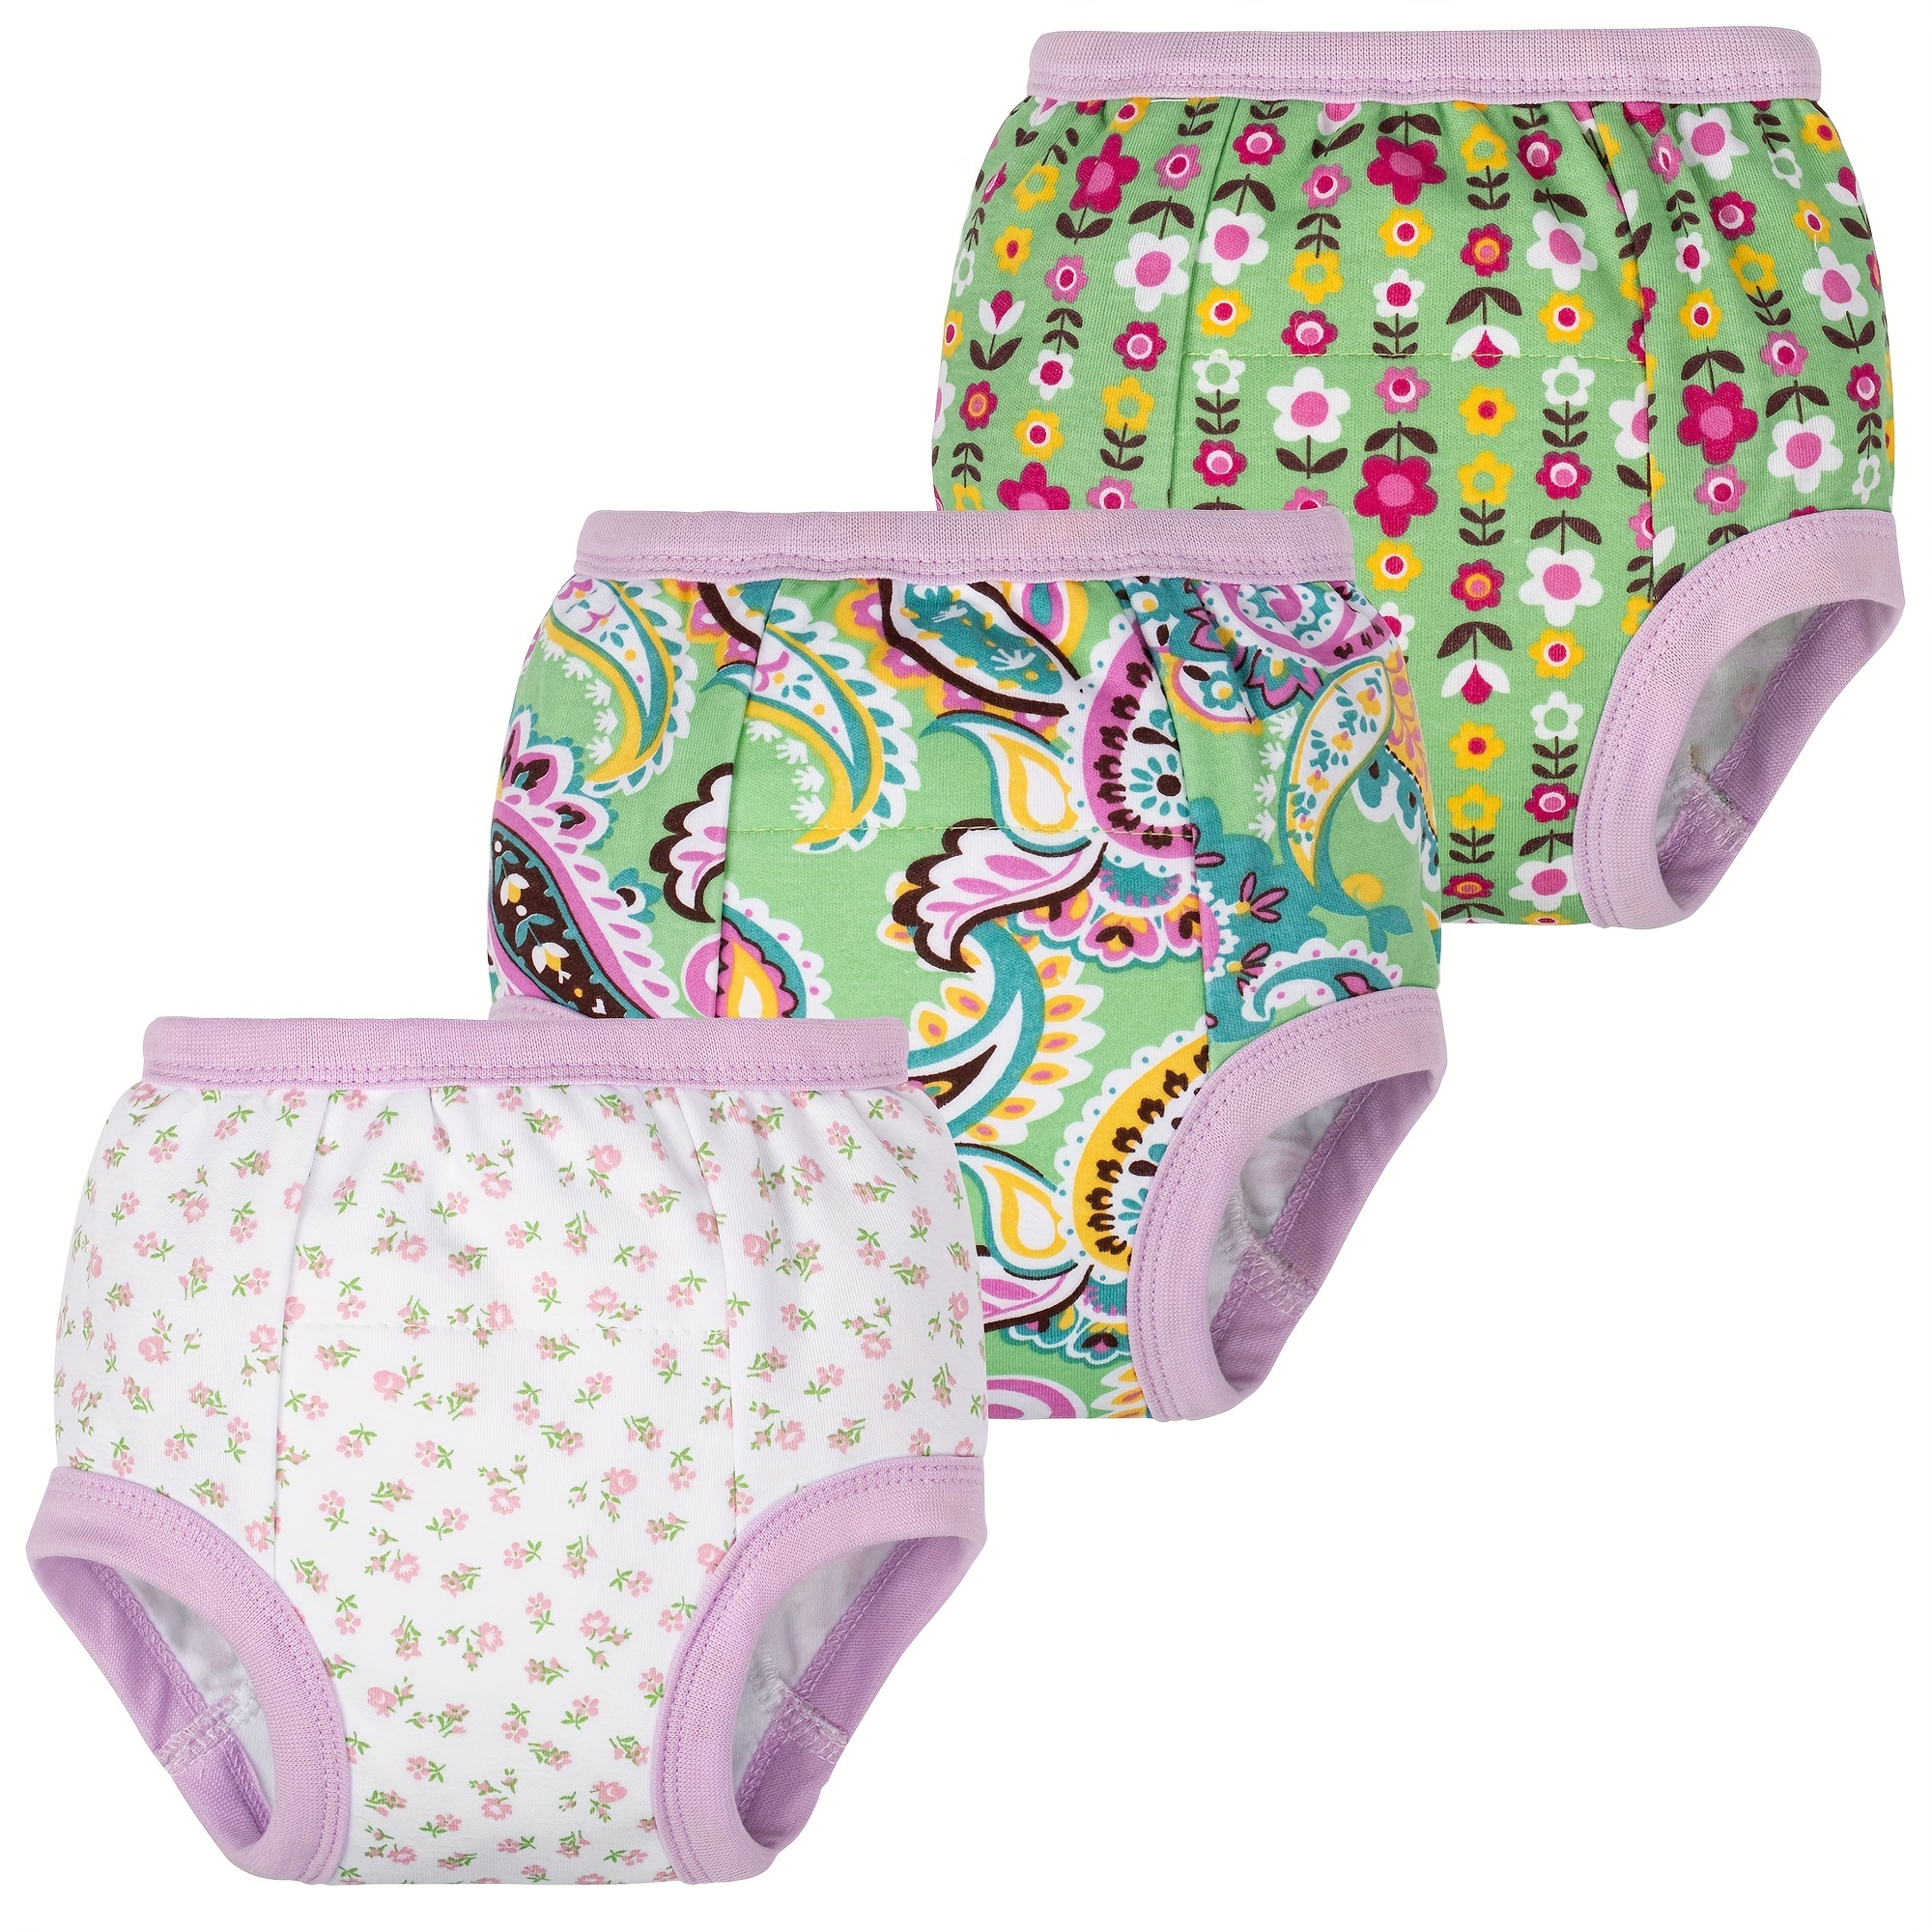 3pcs Reusable Potty Training Pants Baby Kids Boys Girls 6 Layers